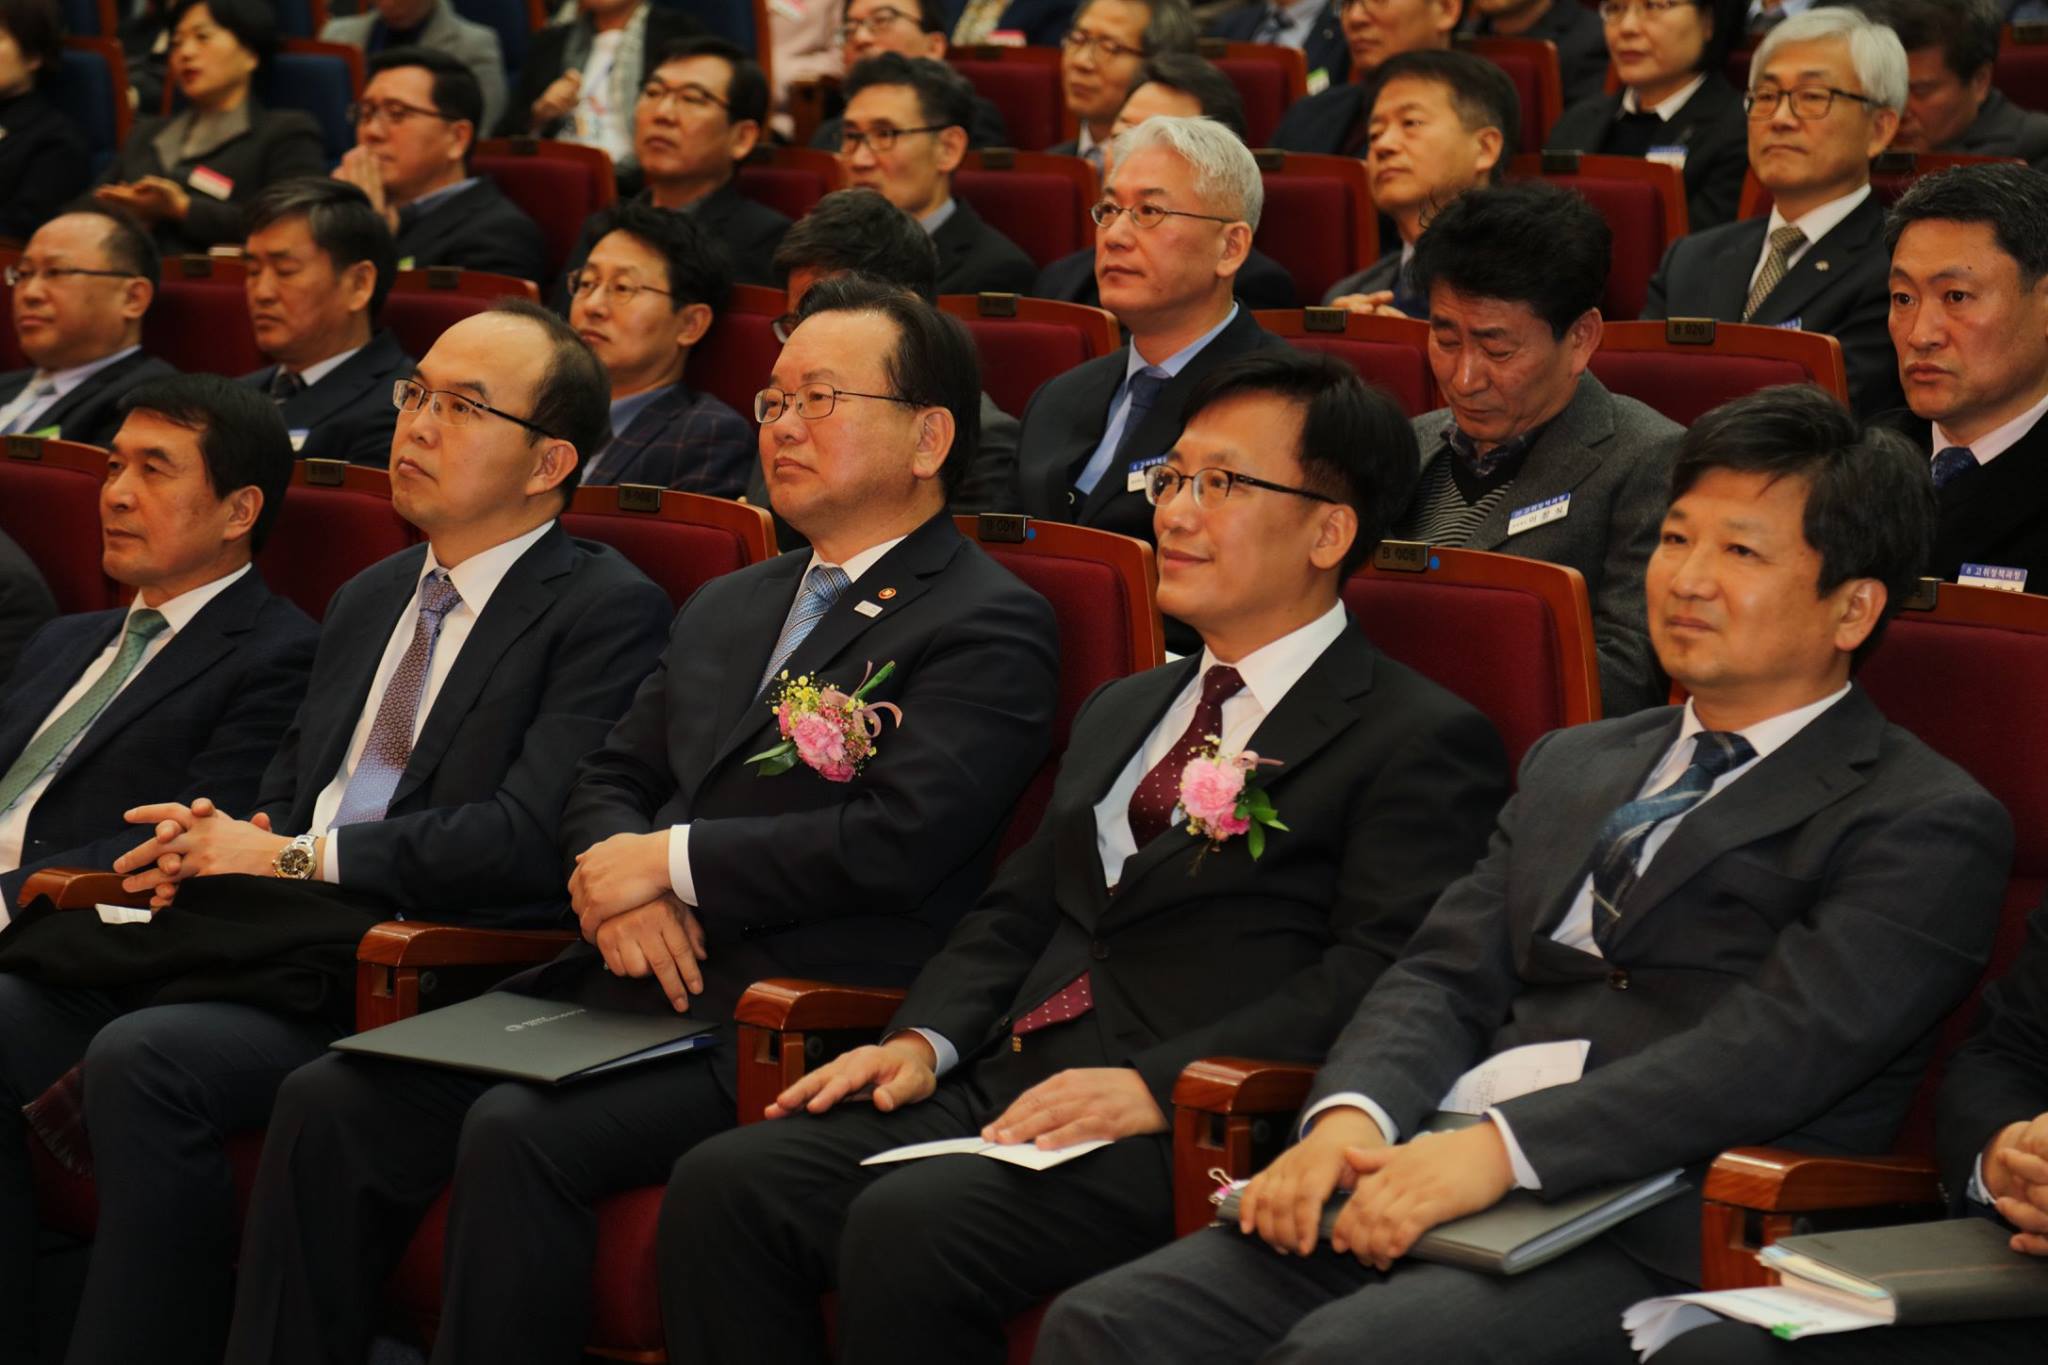 387 Korean officials begin long-term programs at LOGODI 큰 이미지[마우스 클릭 시 창닫기]